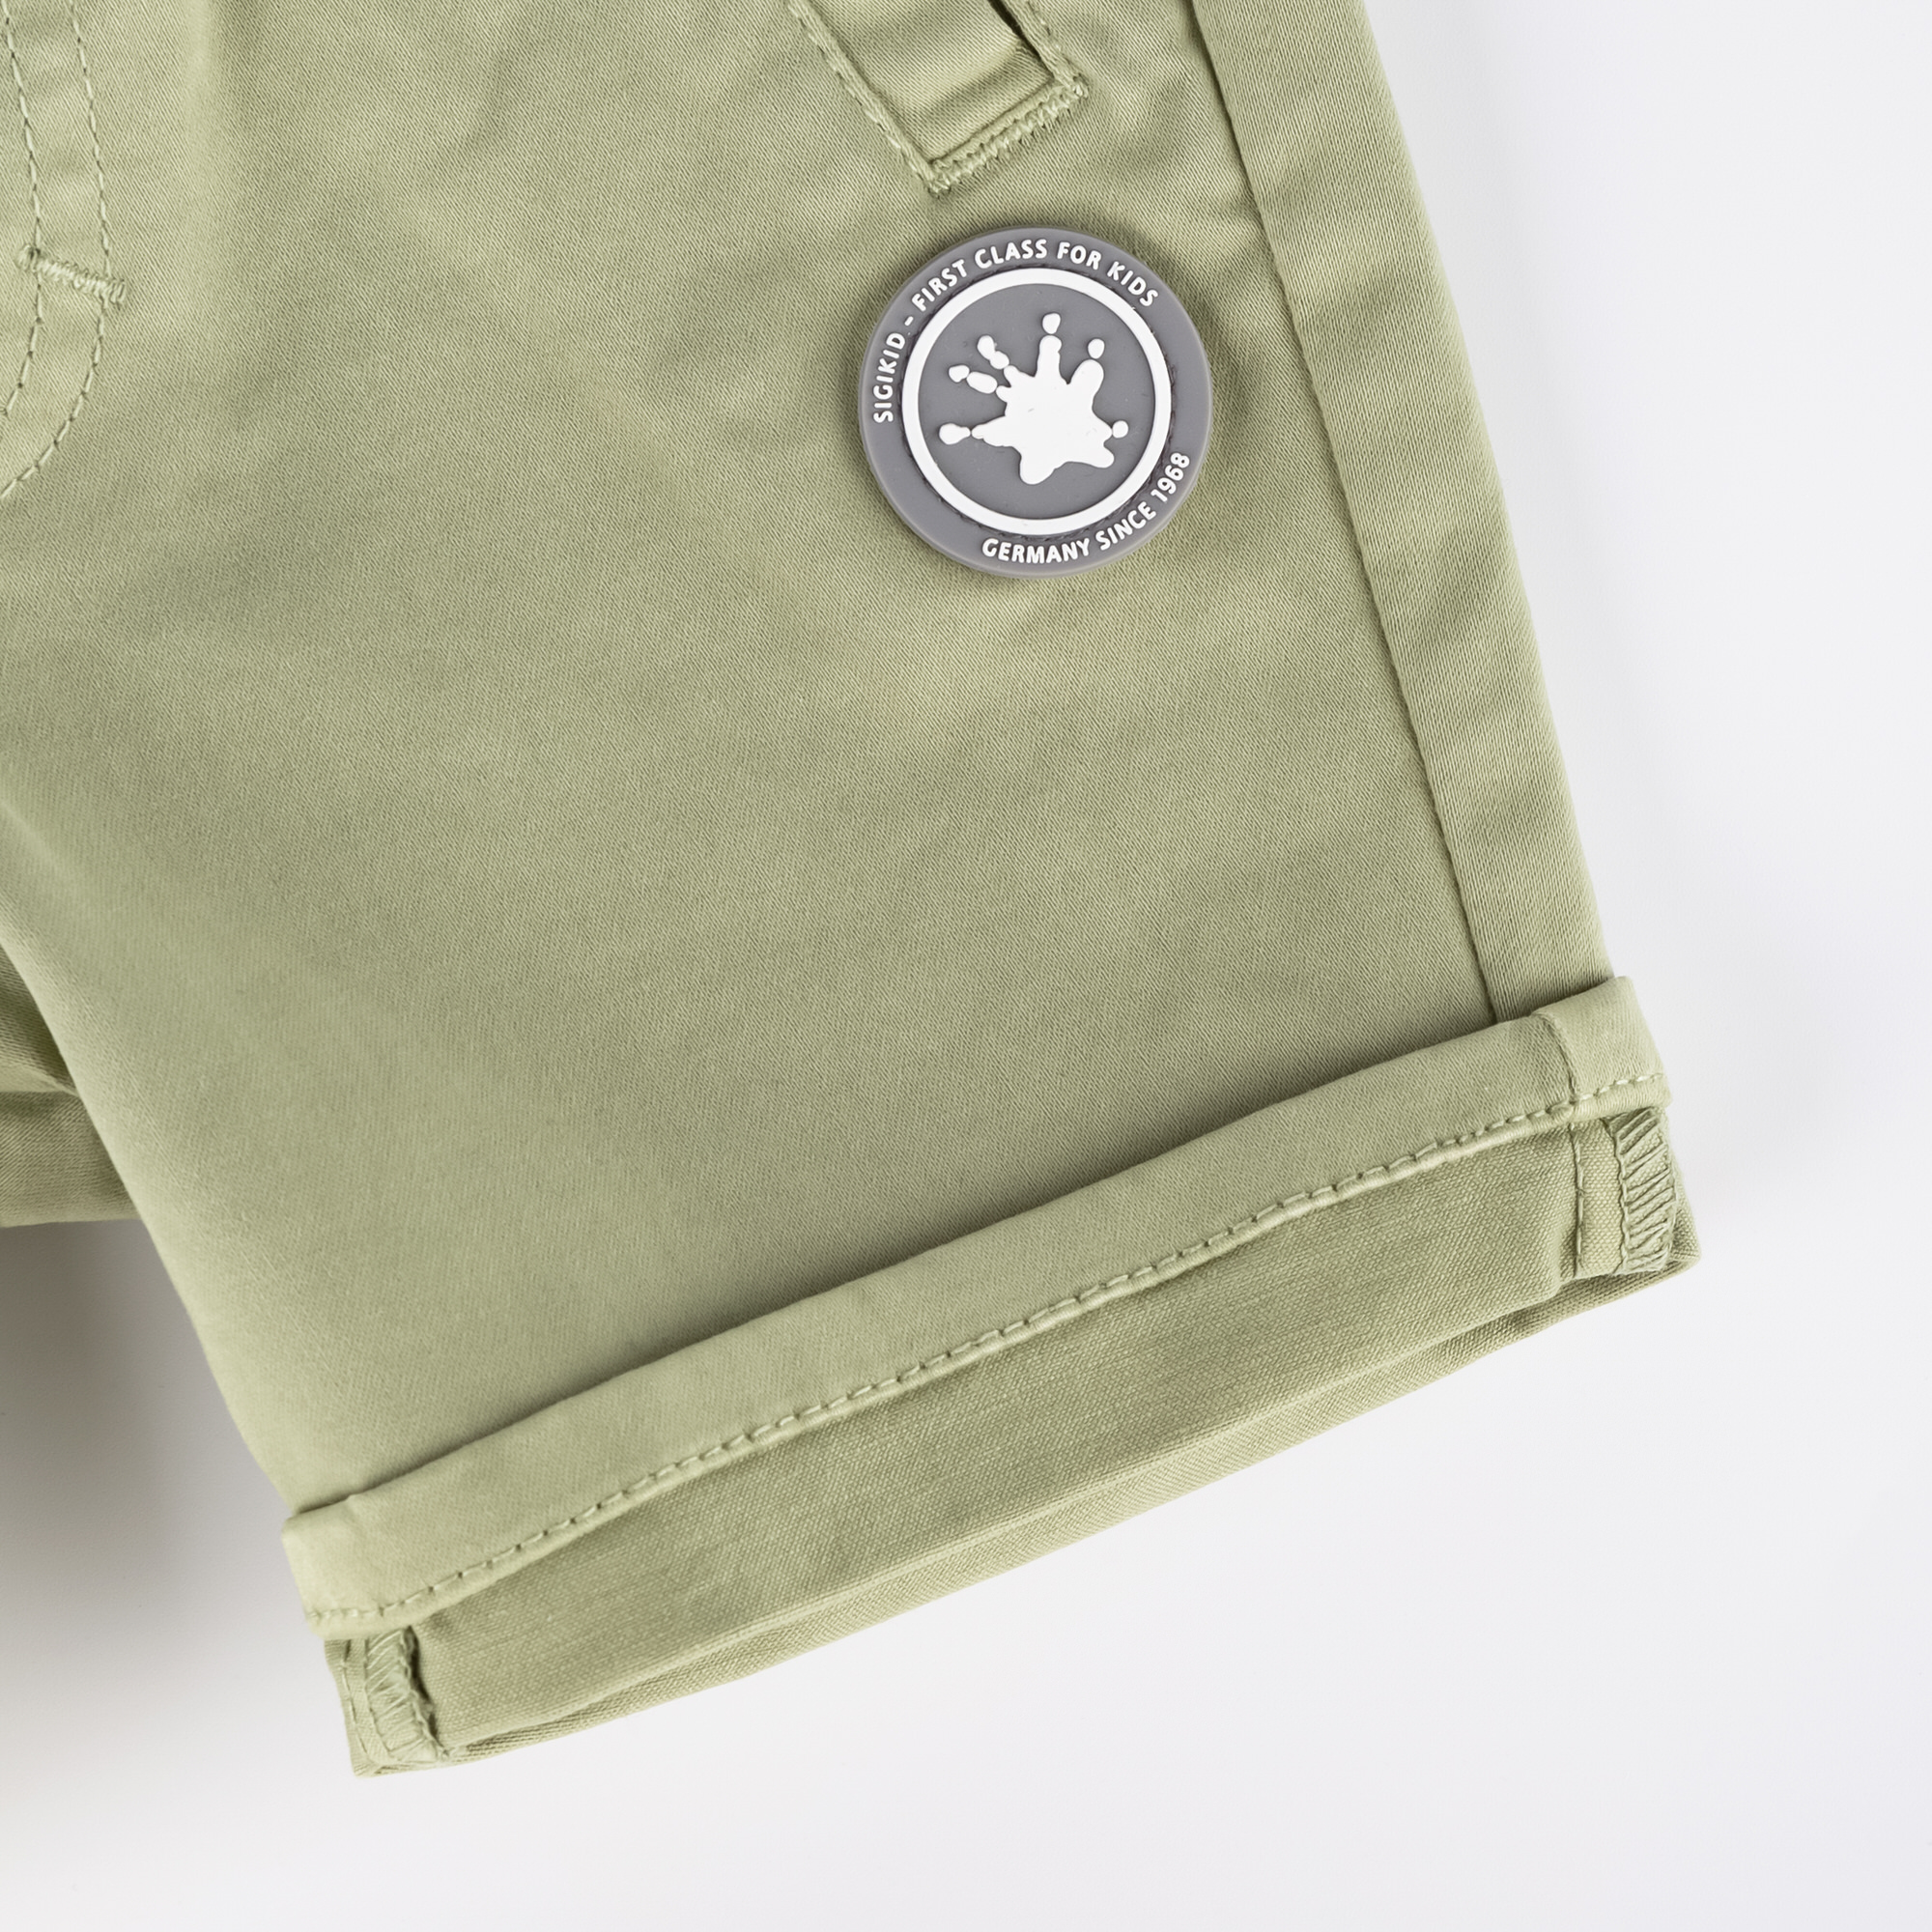 Adjustable waist baby bermuda shorts, reed green